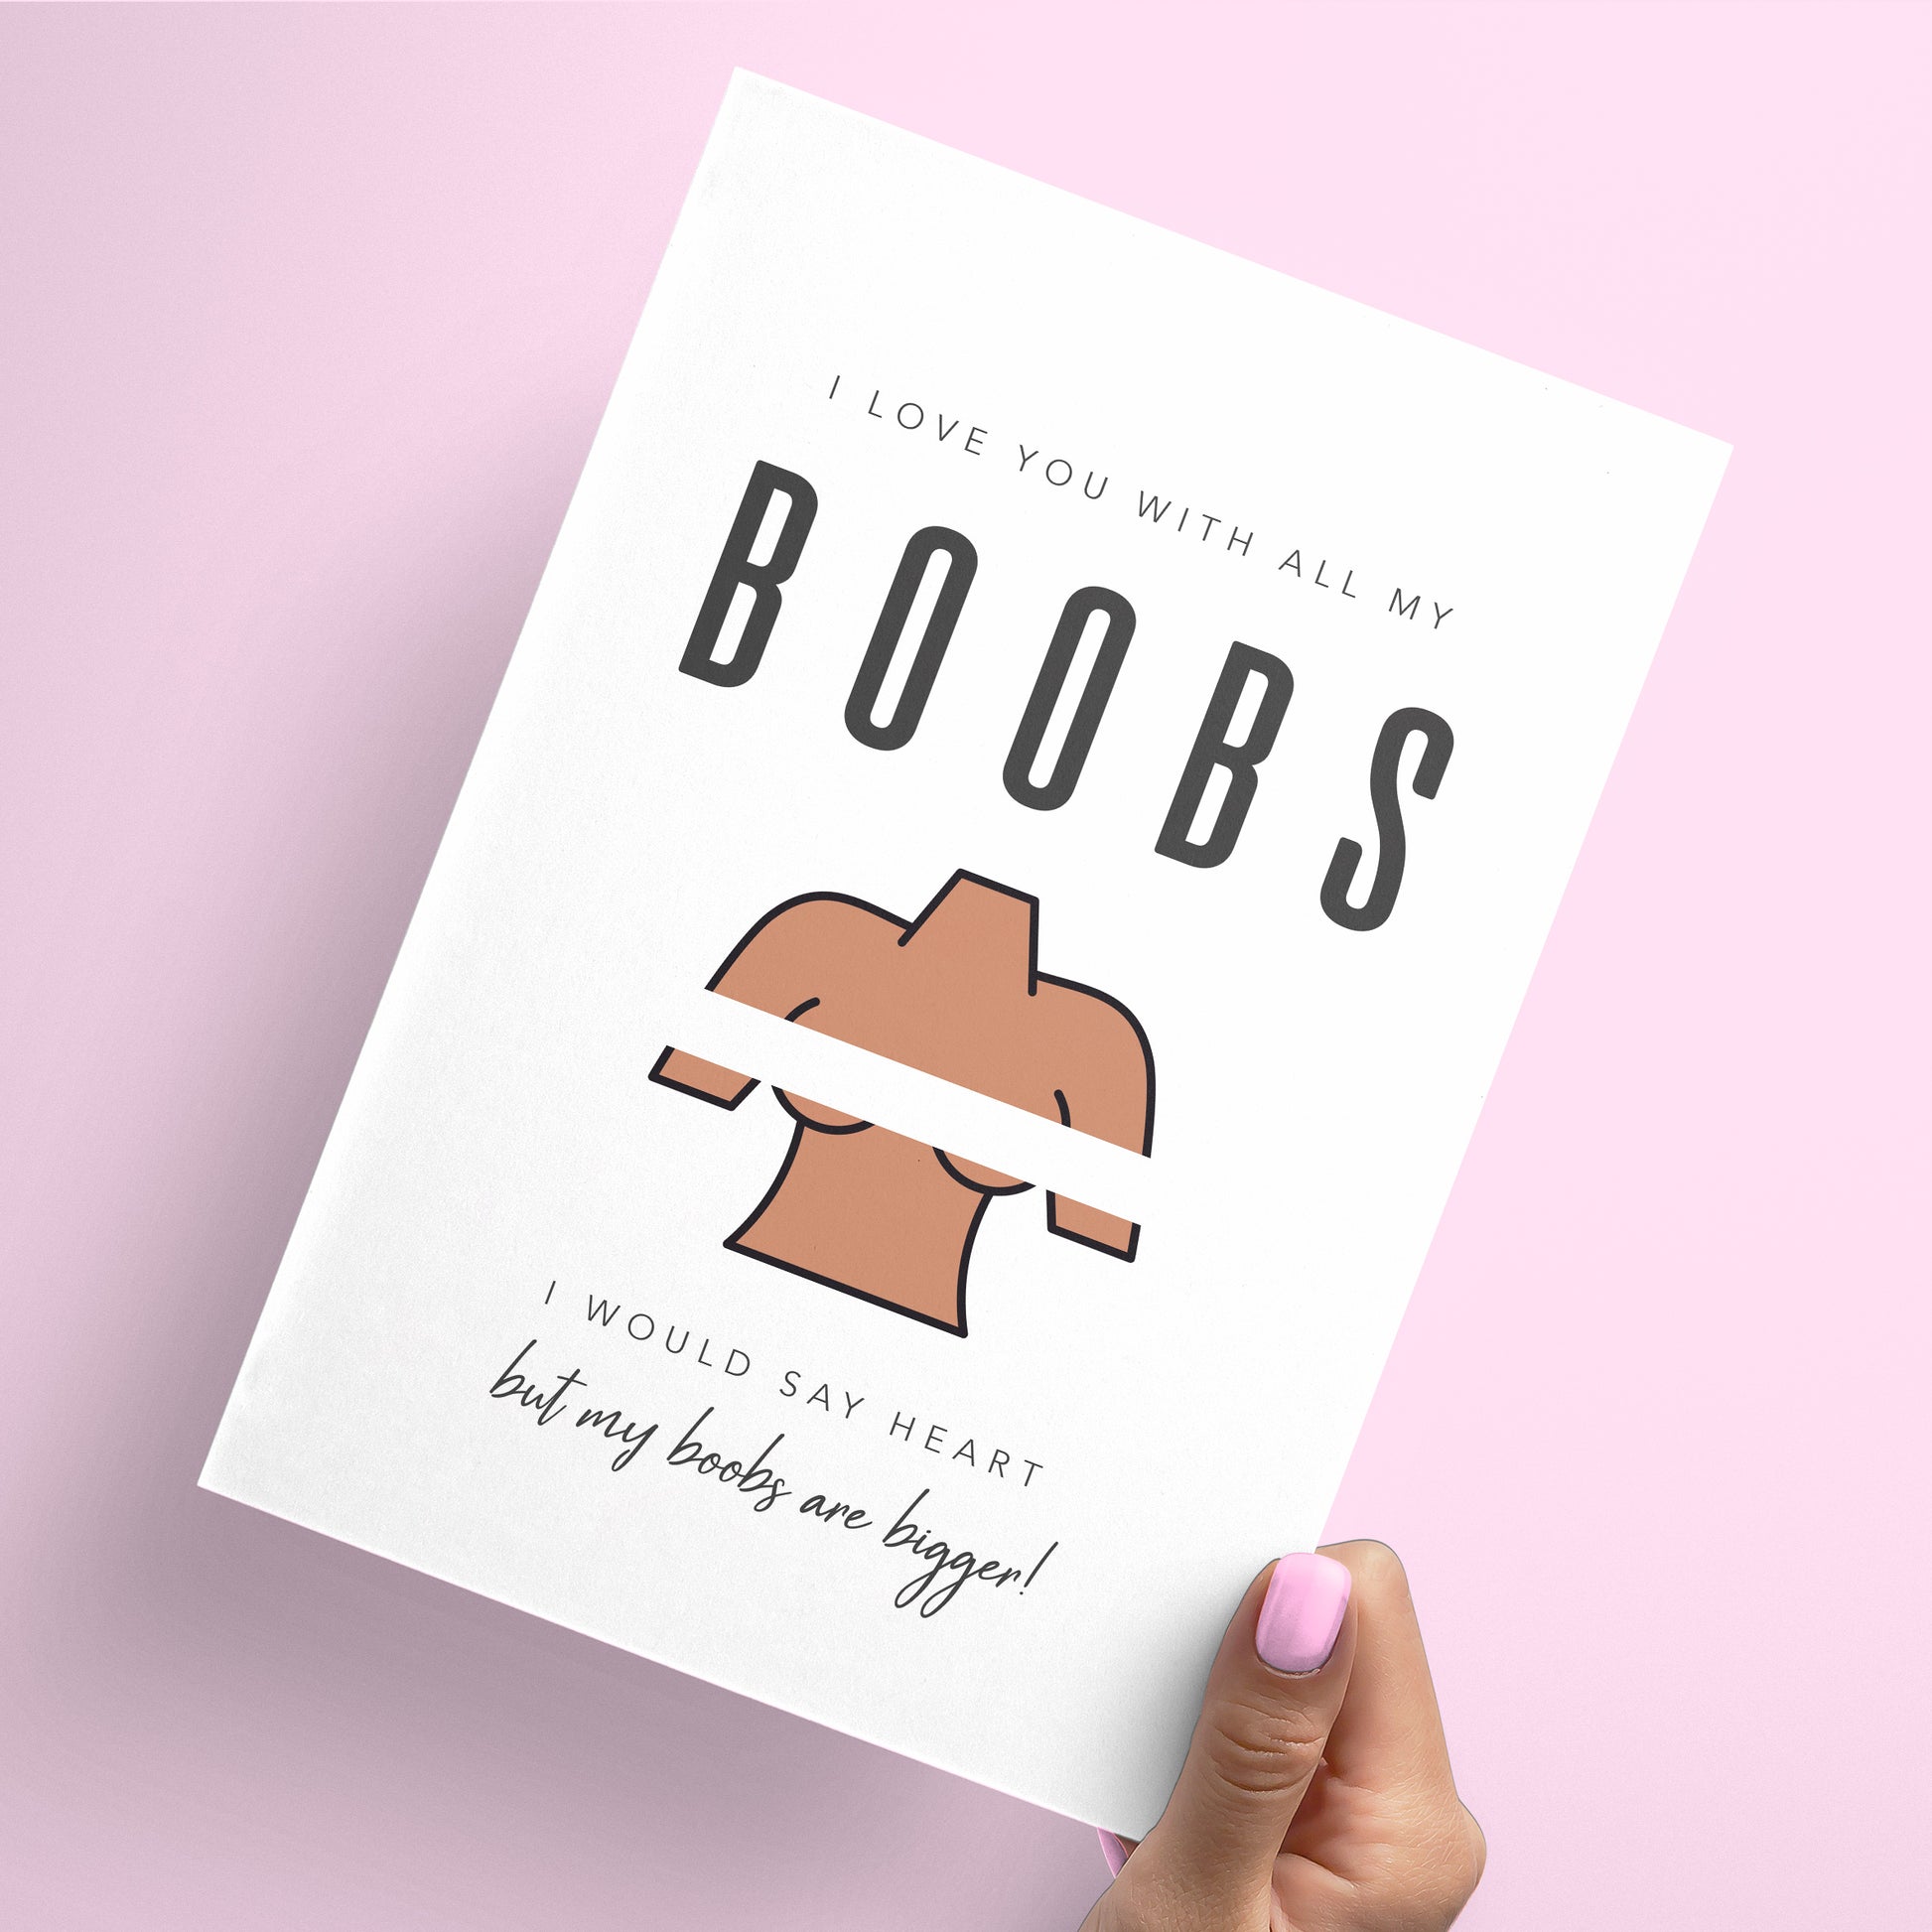 My boobs are bigger birthday card